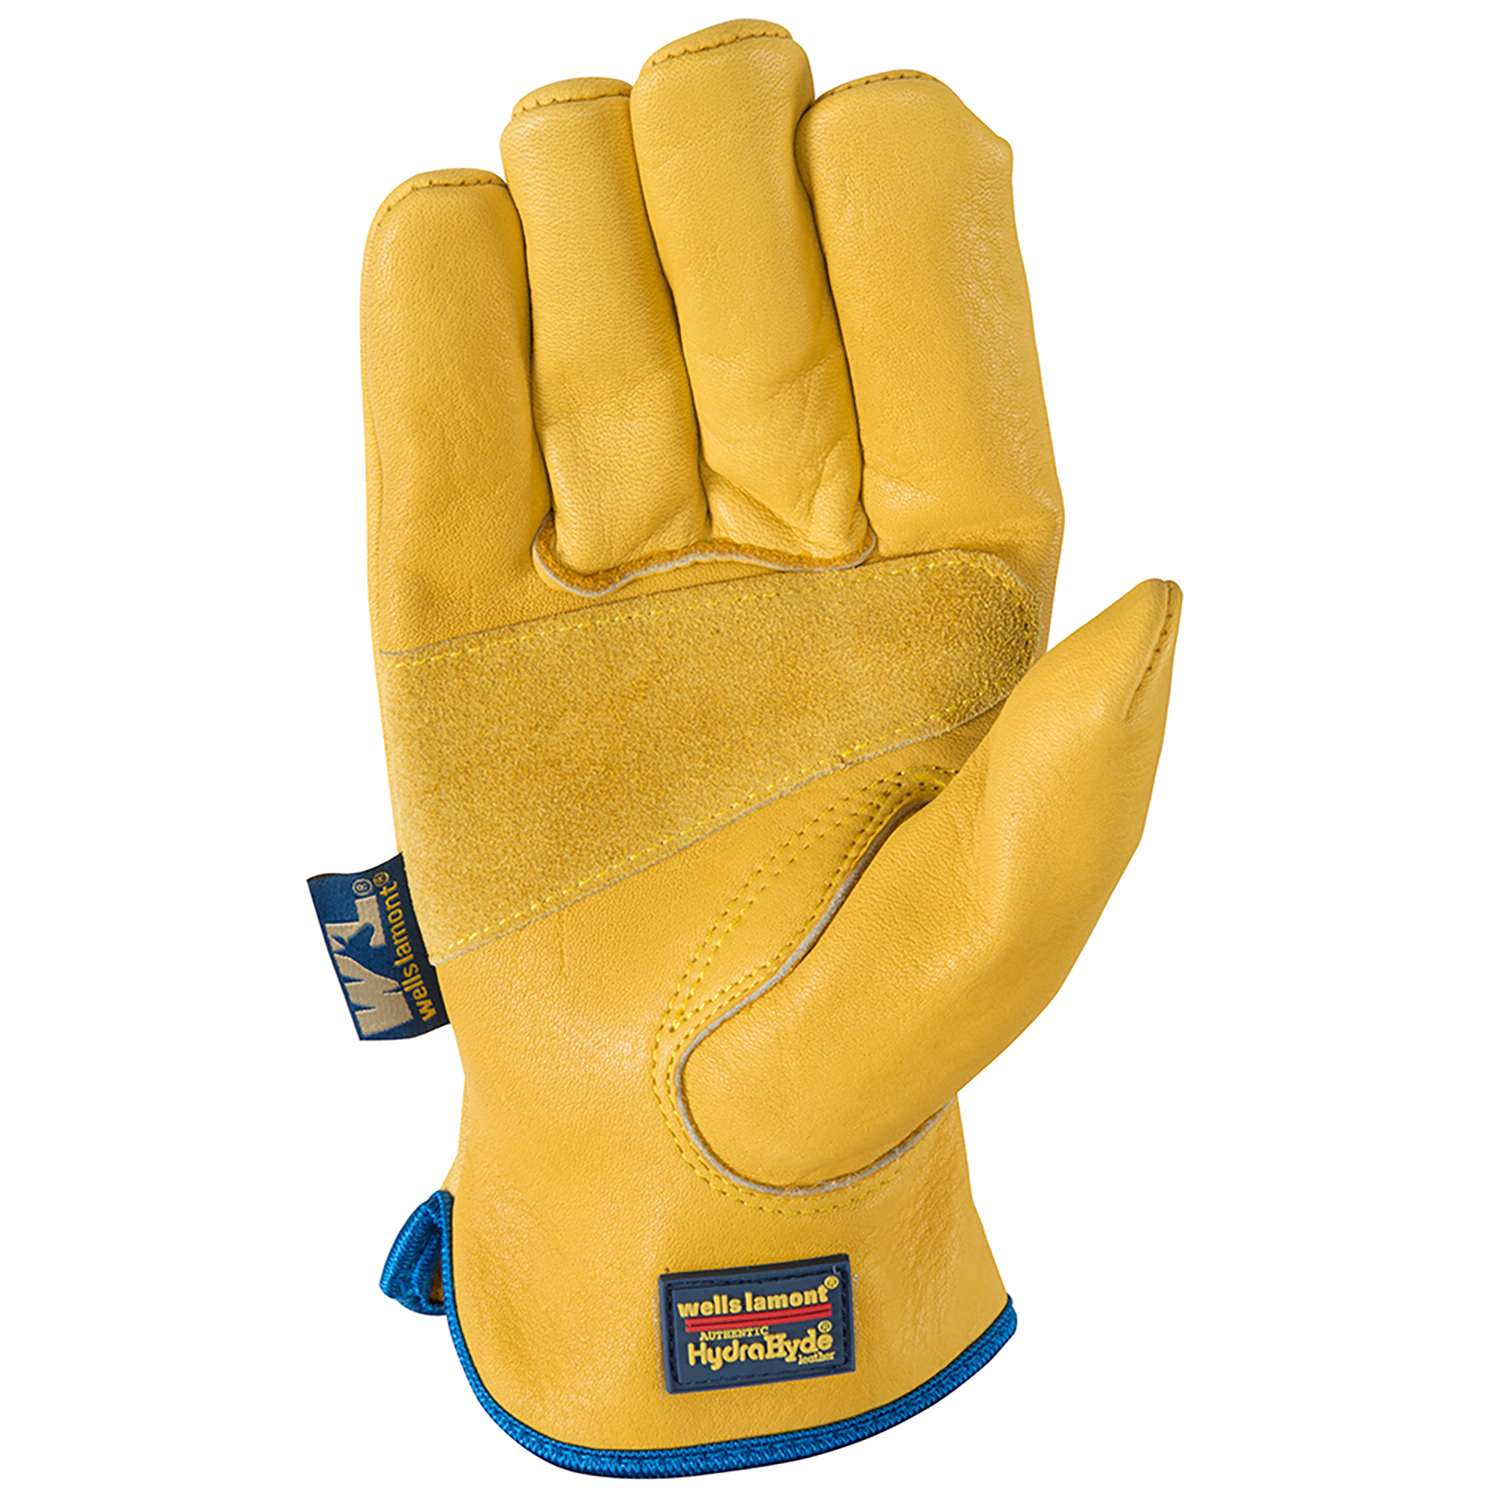 Wells Lamont Men's HydraHyde Leather Work Gloves, 6-pair